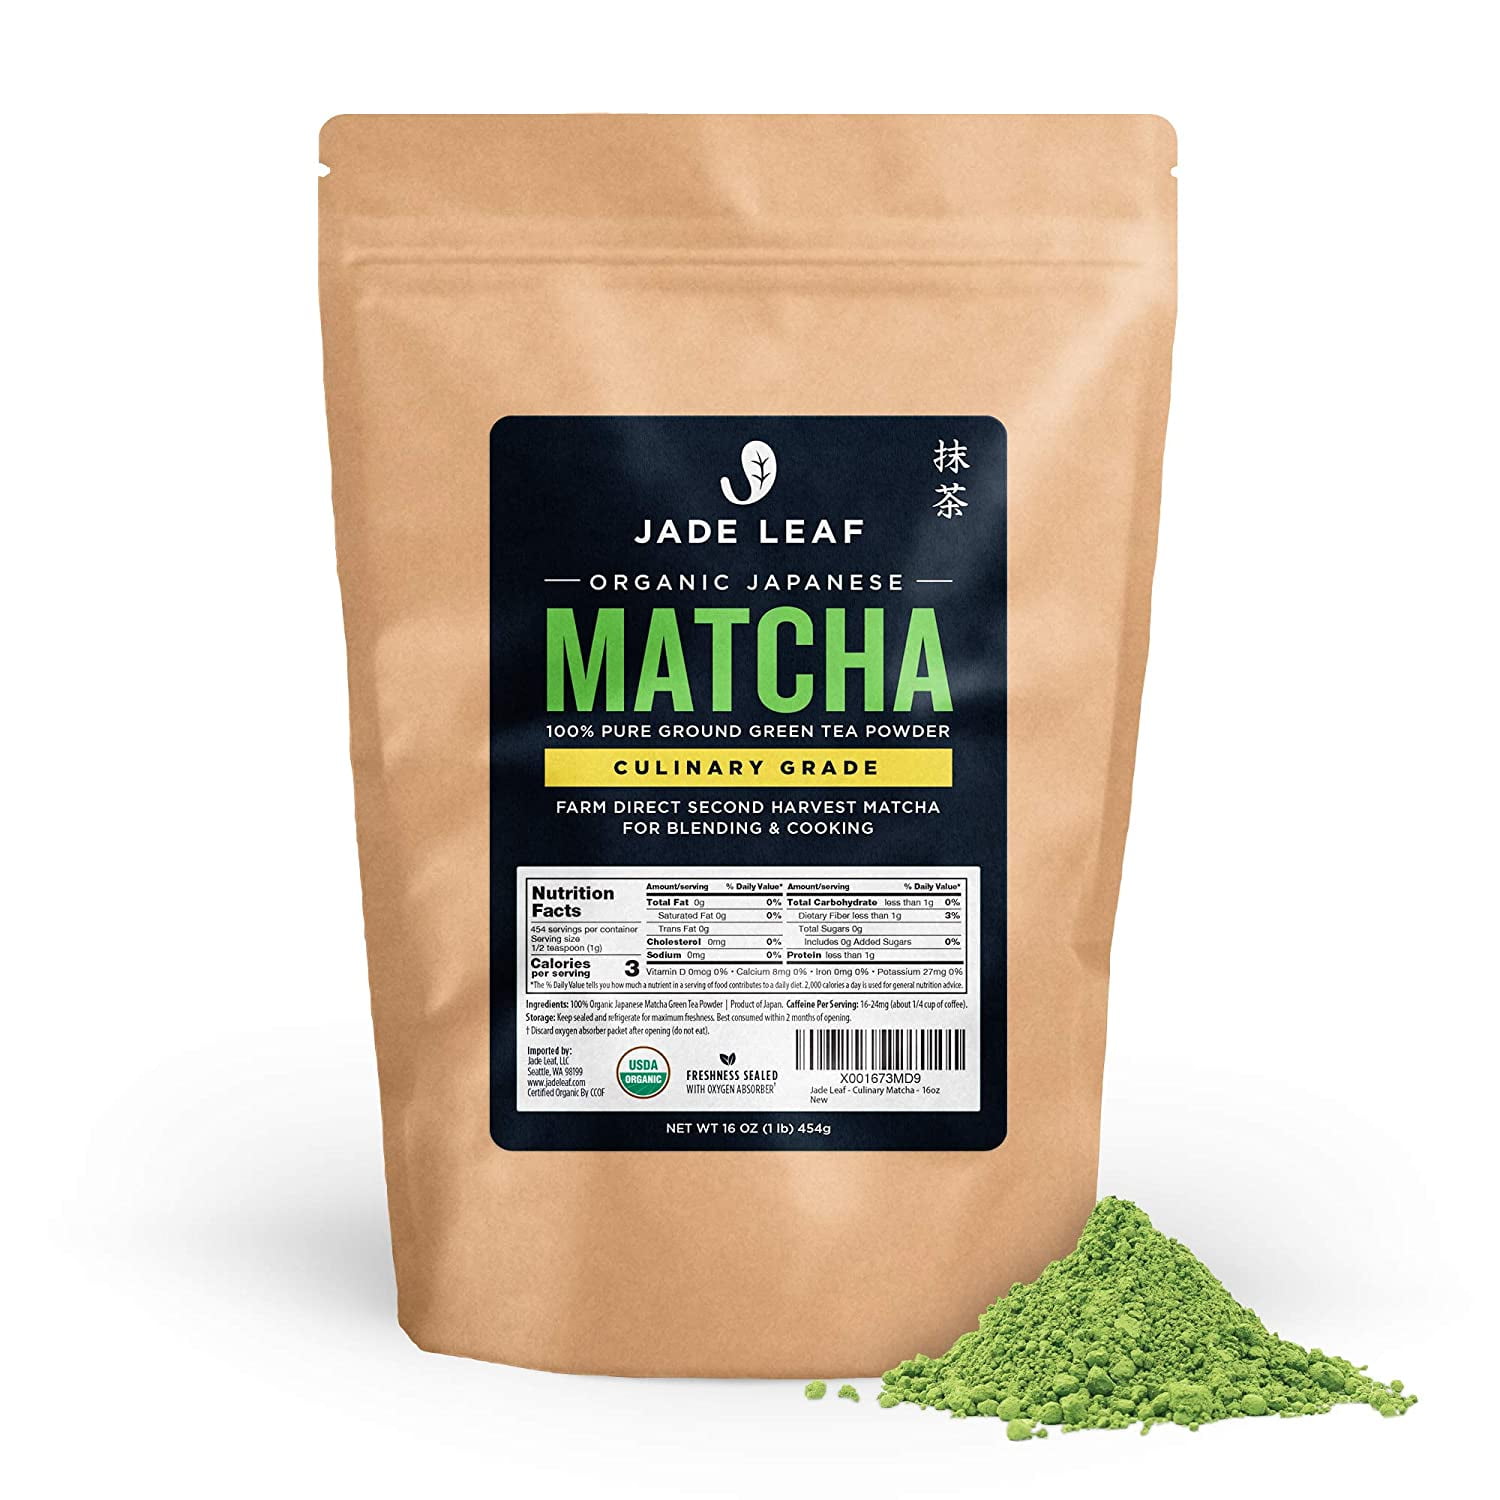 Jade Leaf - Matcha Tea Measuring Spoon/Scoop - Perfect 1G Serving of Matcha Green Tea Powder - Metal/Stainless Steel